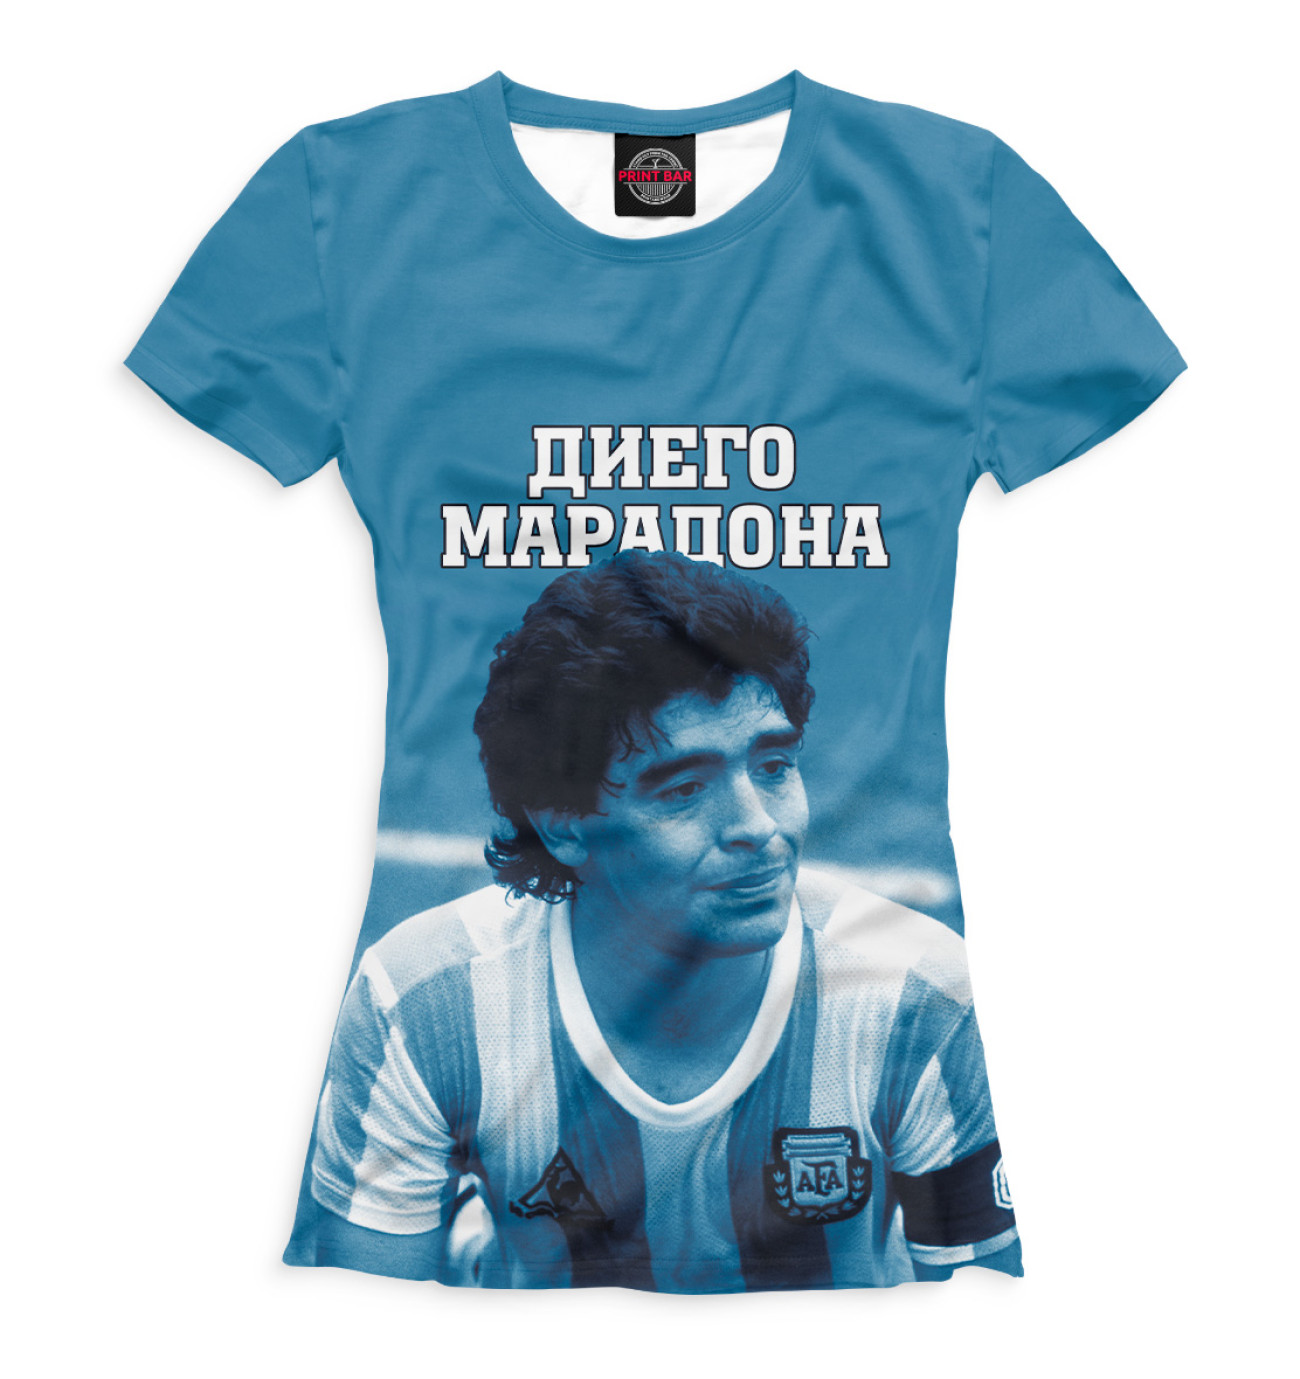 Женская Футболка Диего Марадона, артикул: FTO-185068-fut-1